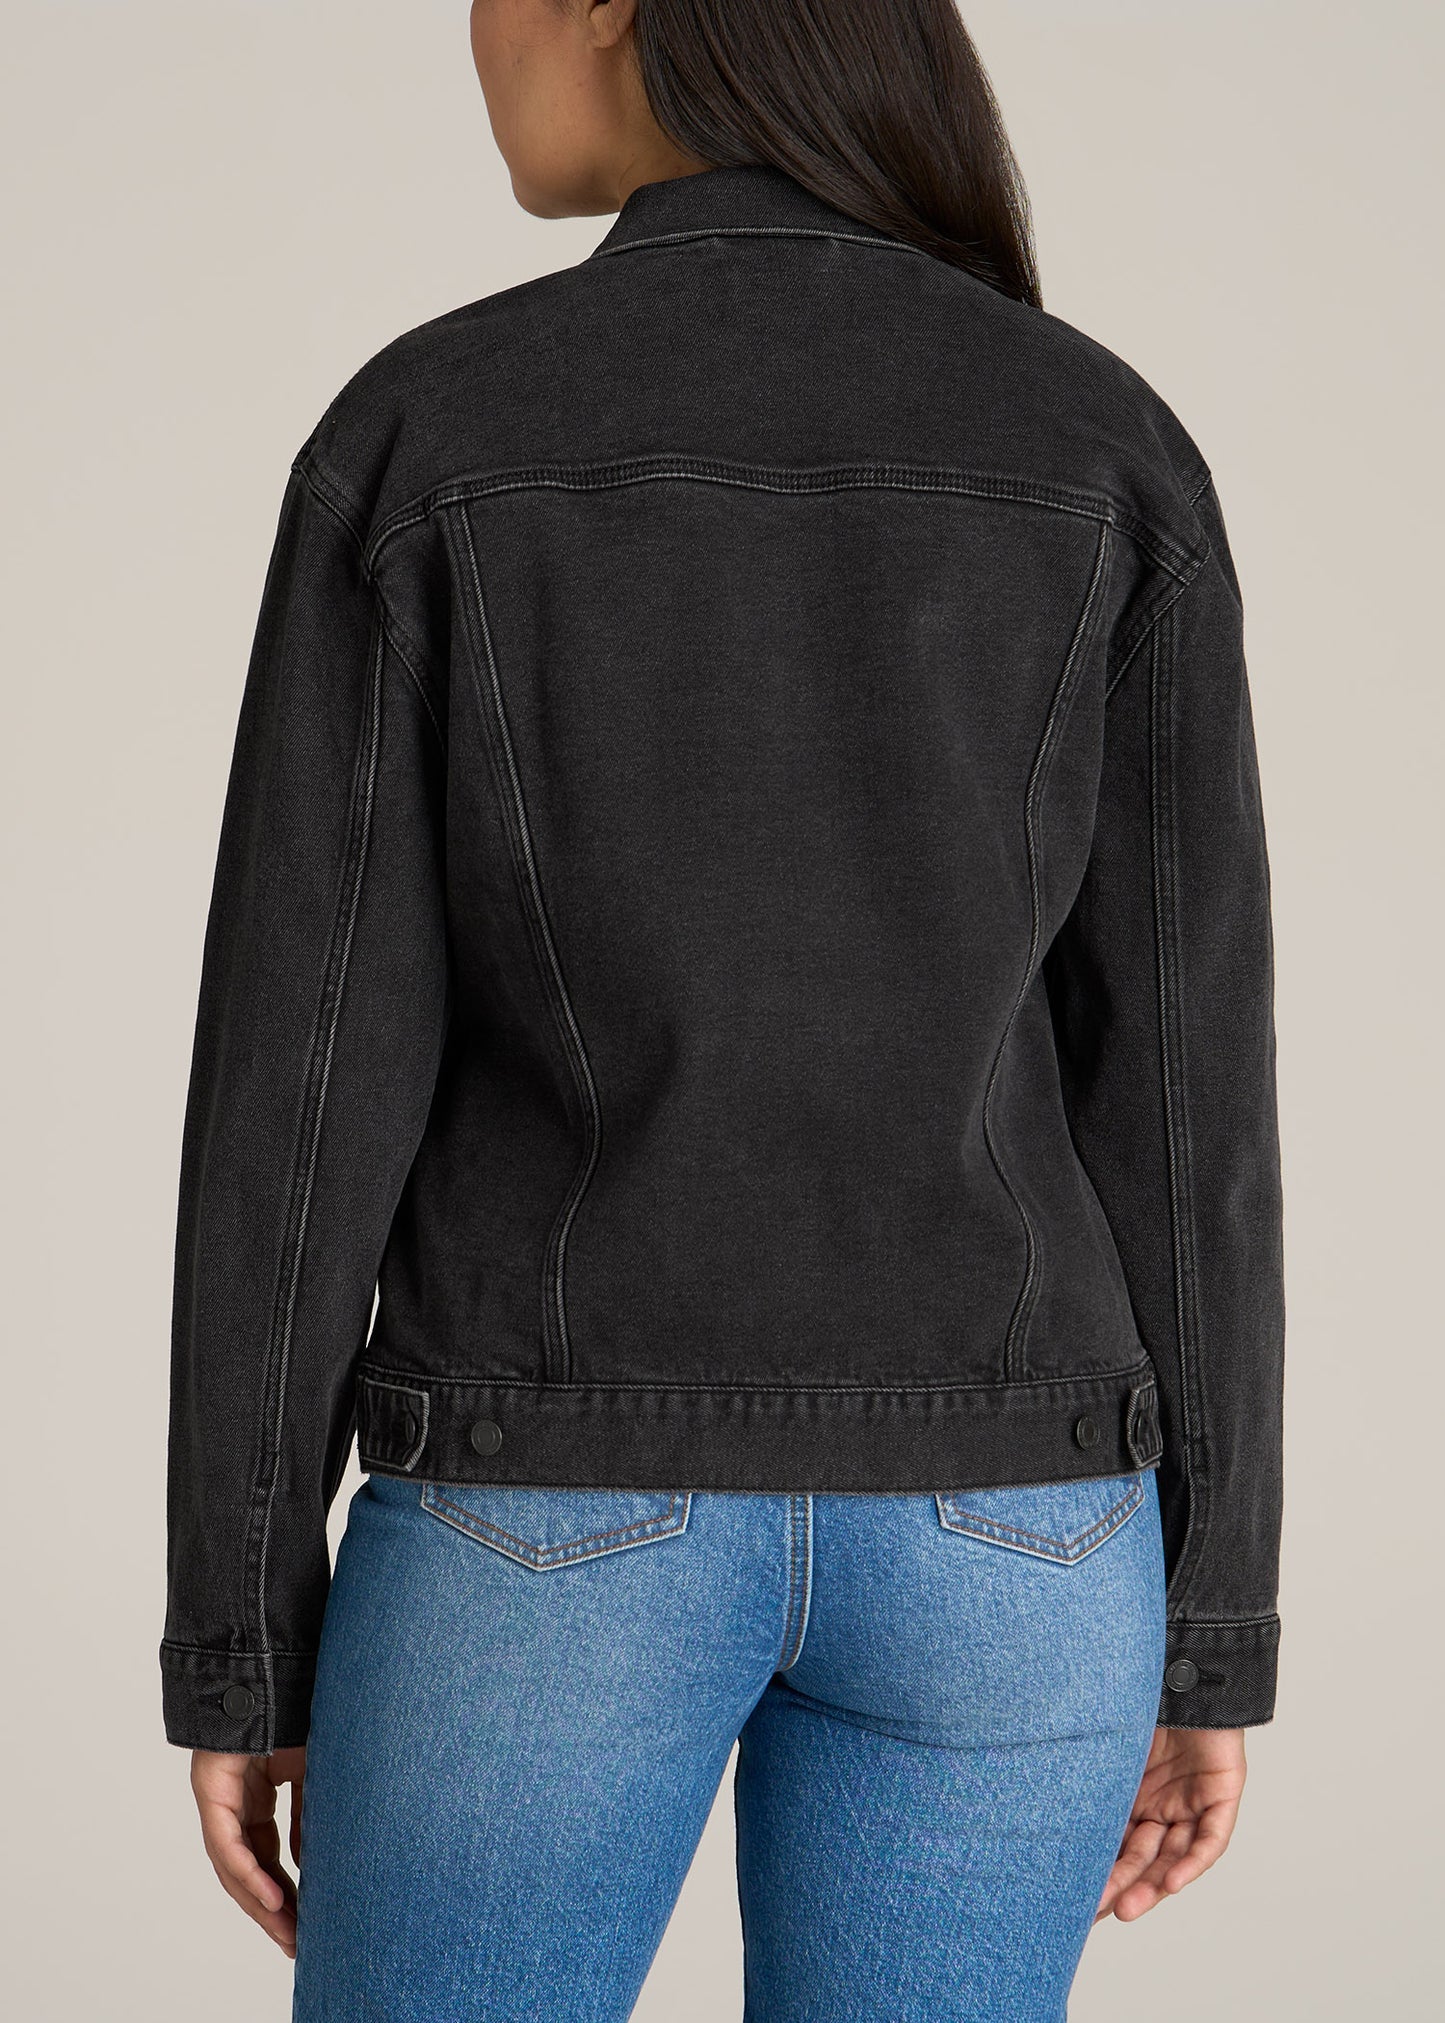 Women's Black Stone Wash Denim Jacket